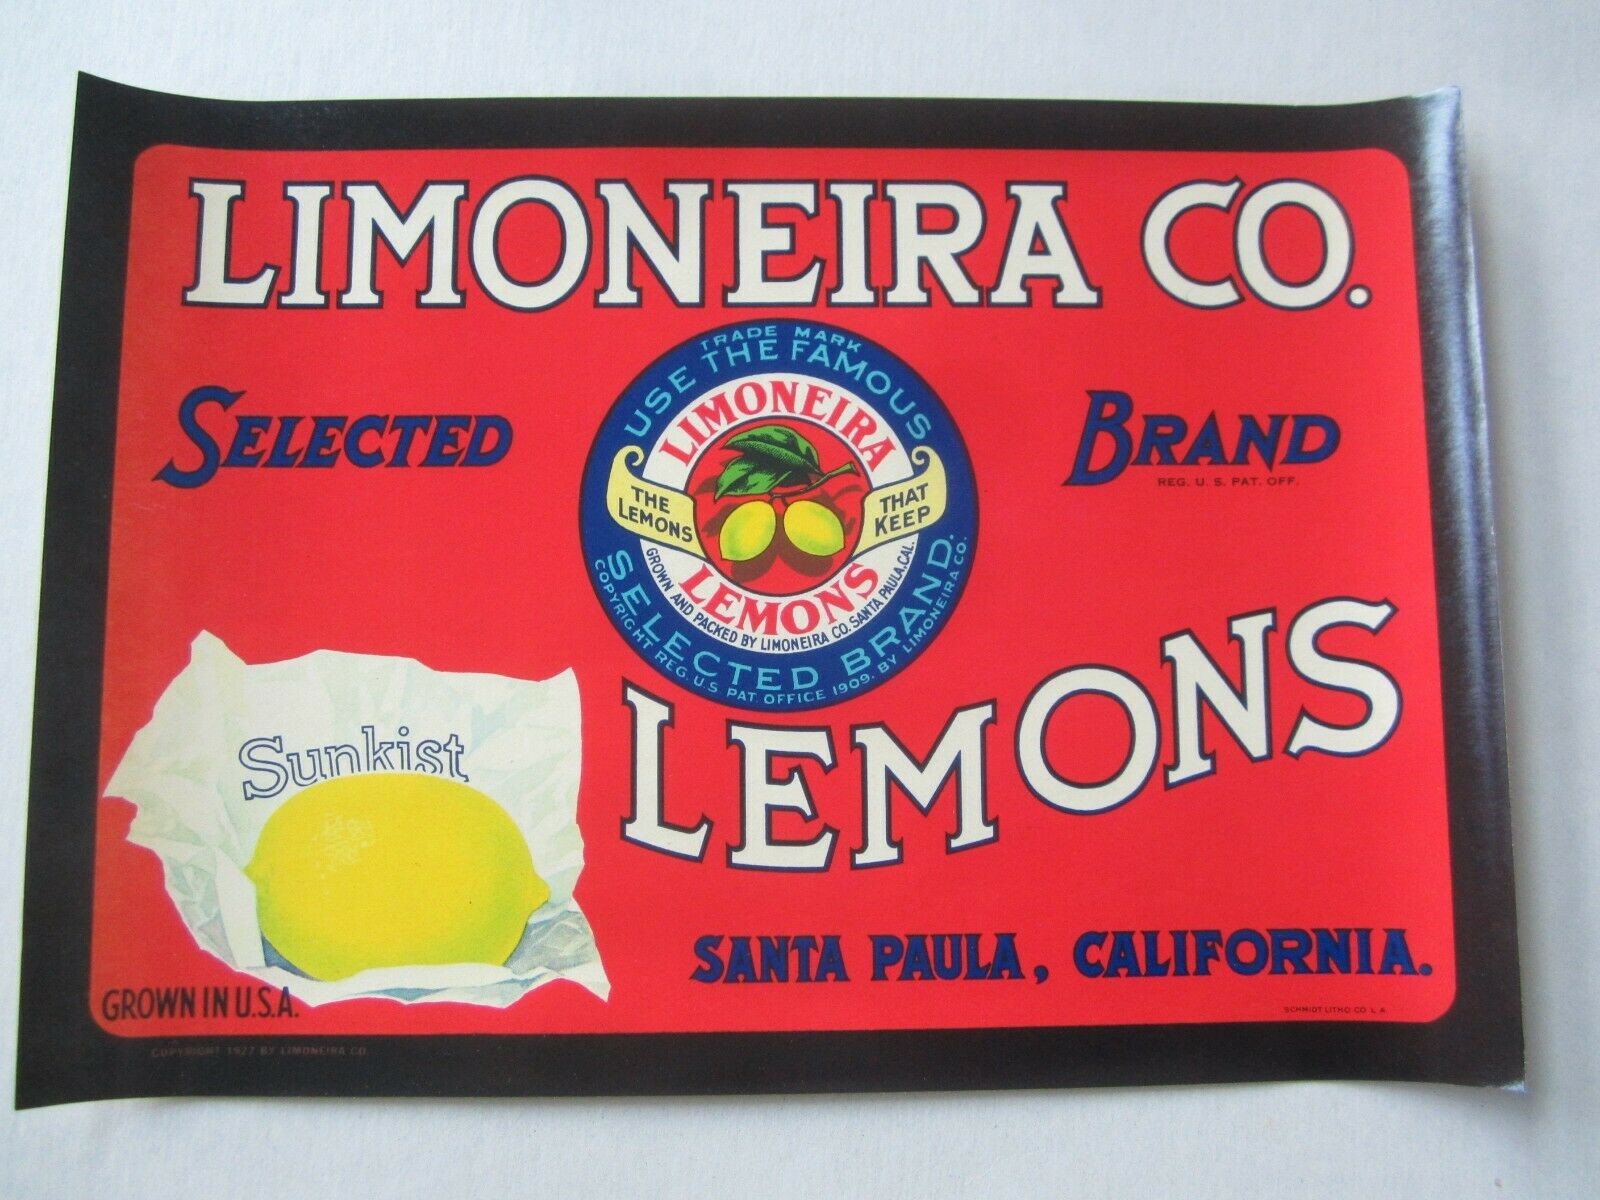  Old Vintage - LIMONEIRA CO. Sunkist LEMON Crat...